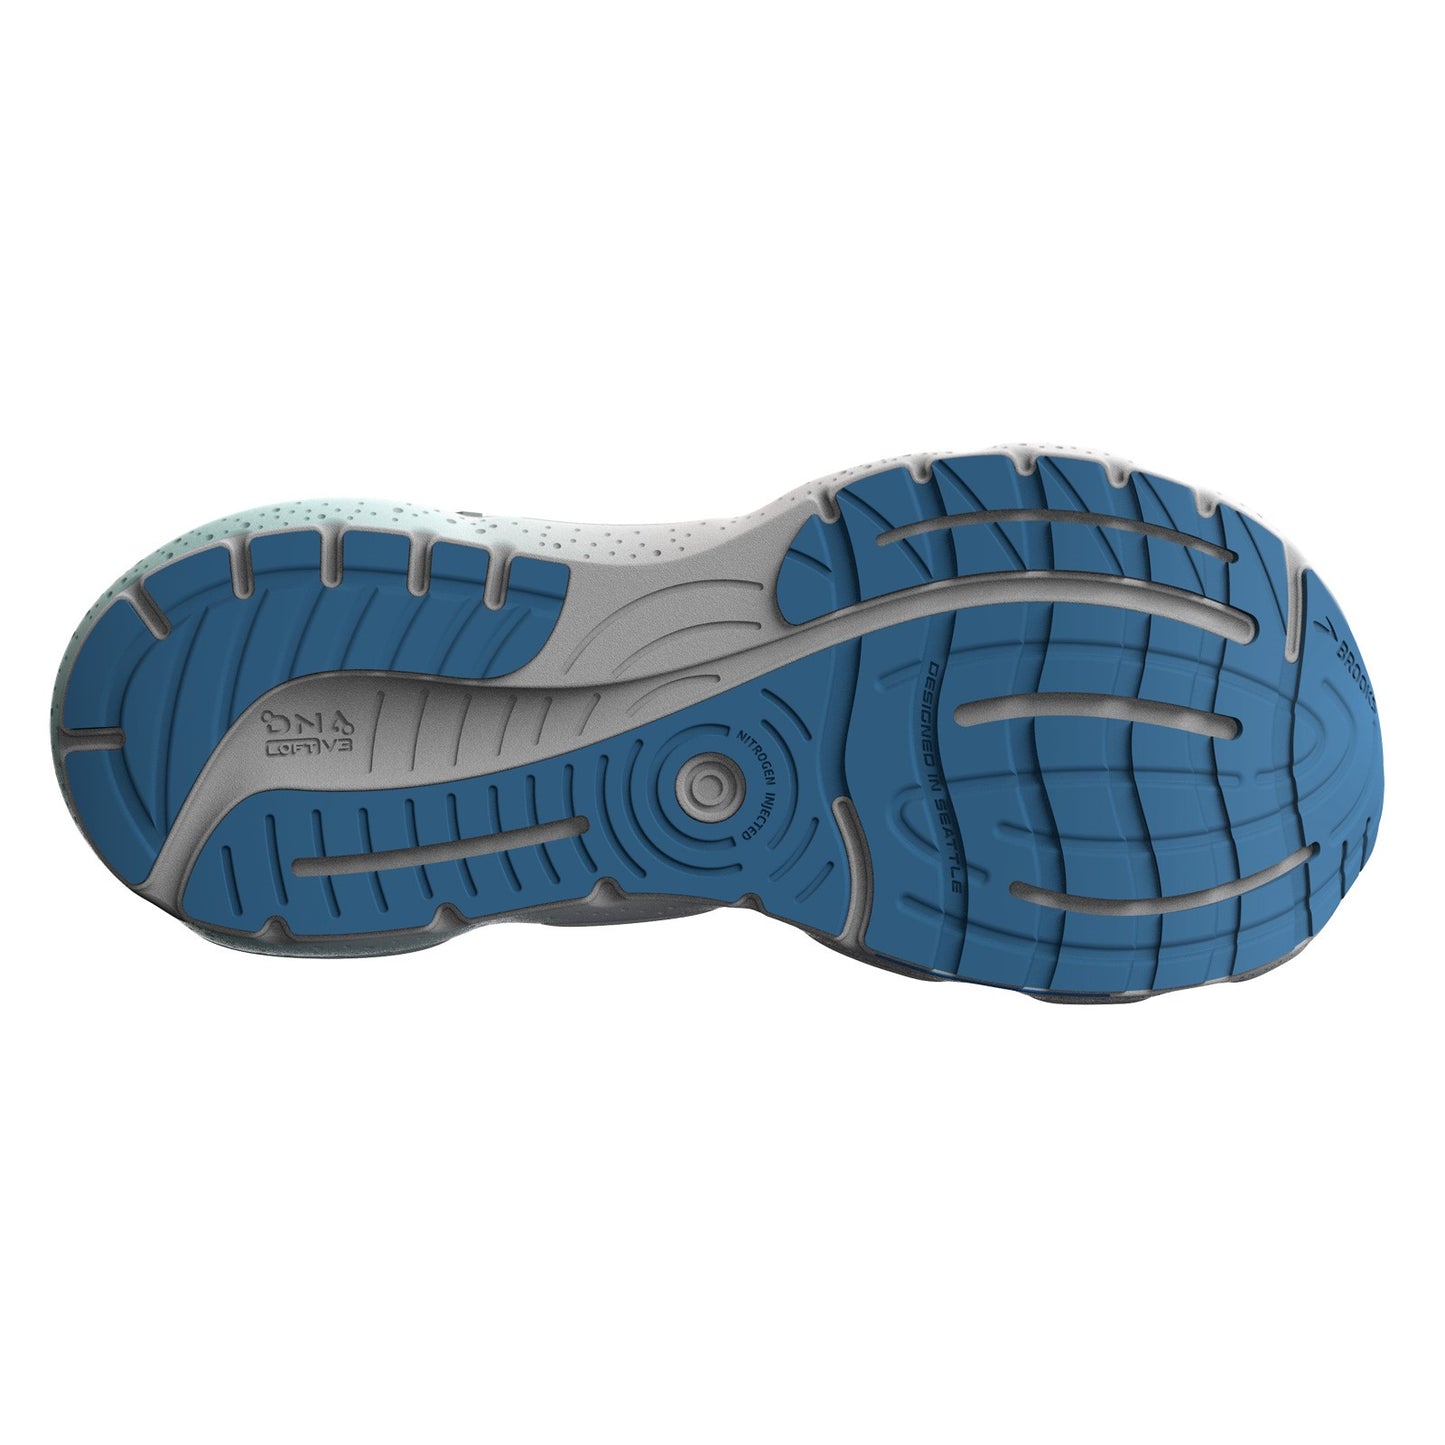 Peltz Shoes  Women's Brooks Glycerin GTS 20 Running Shoe Blue Multi 120370 1B 494